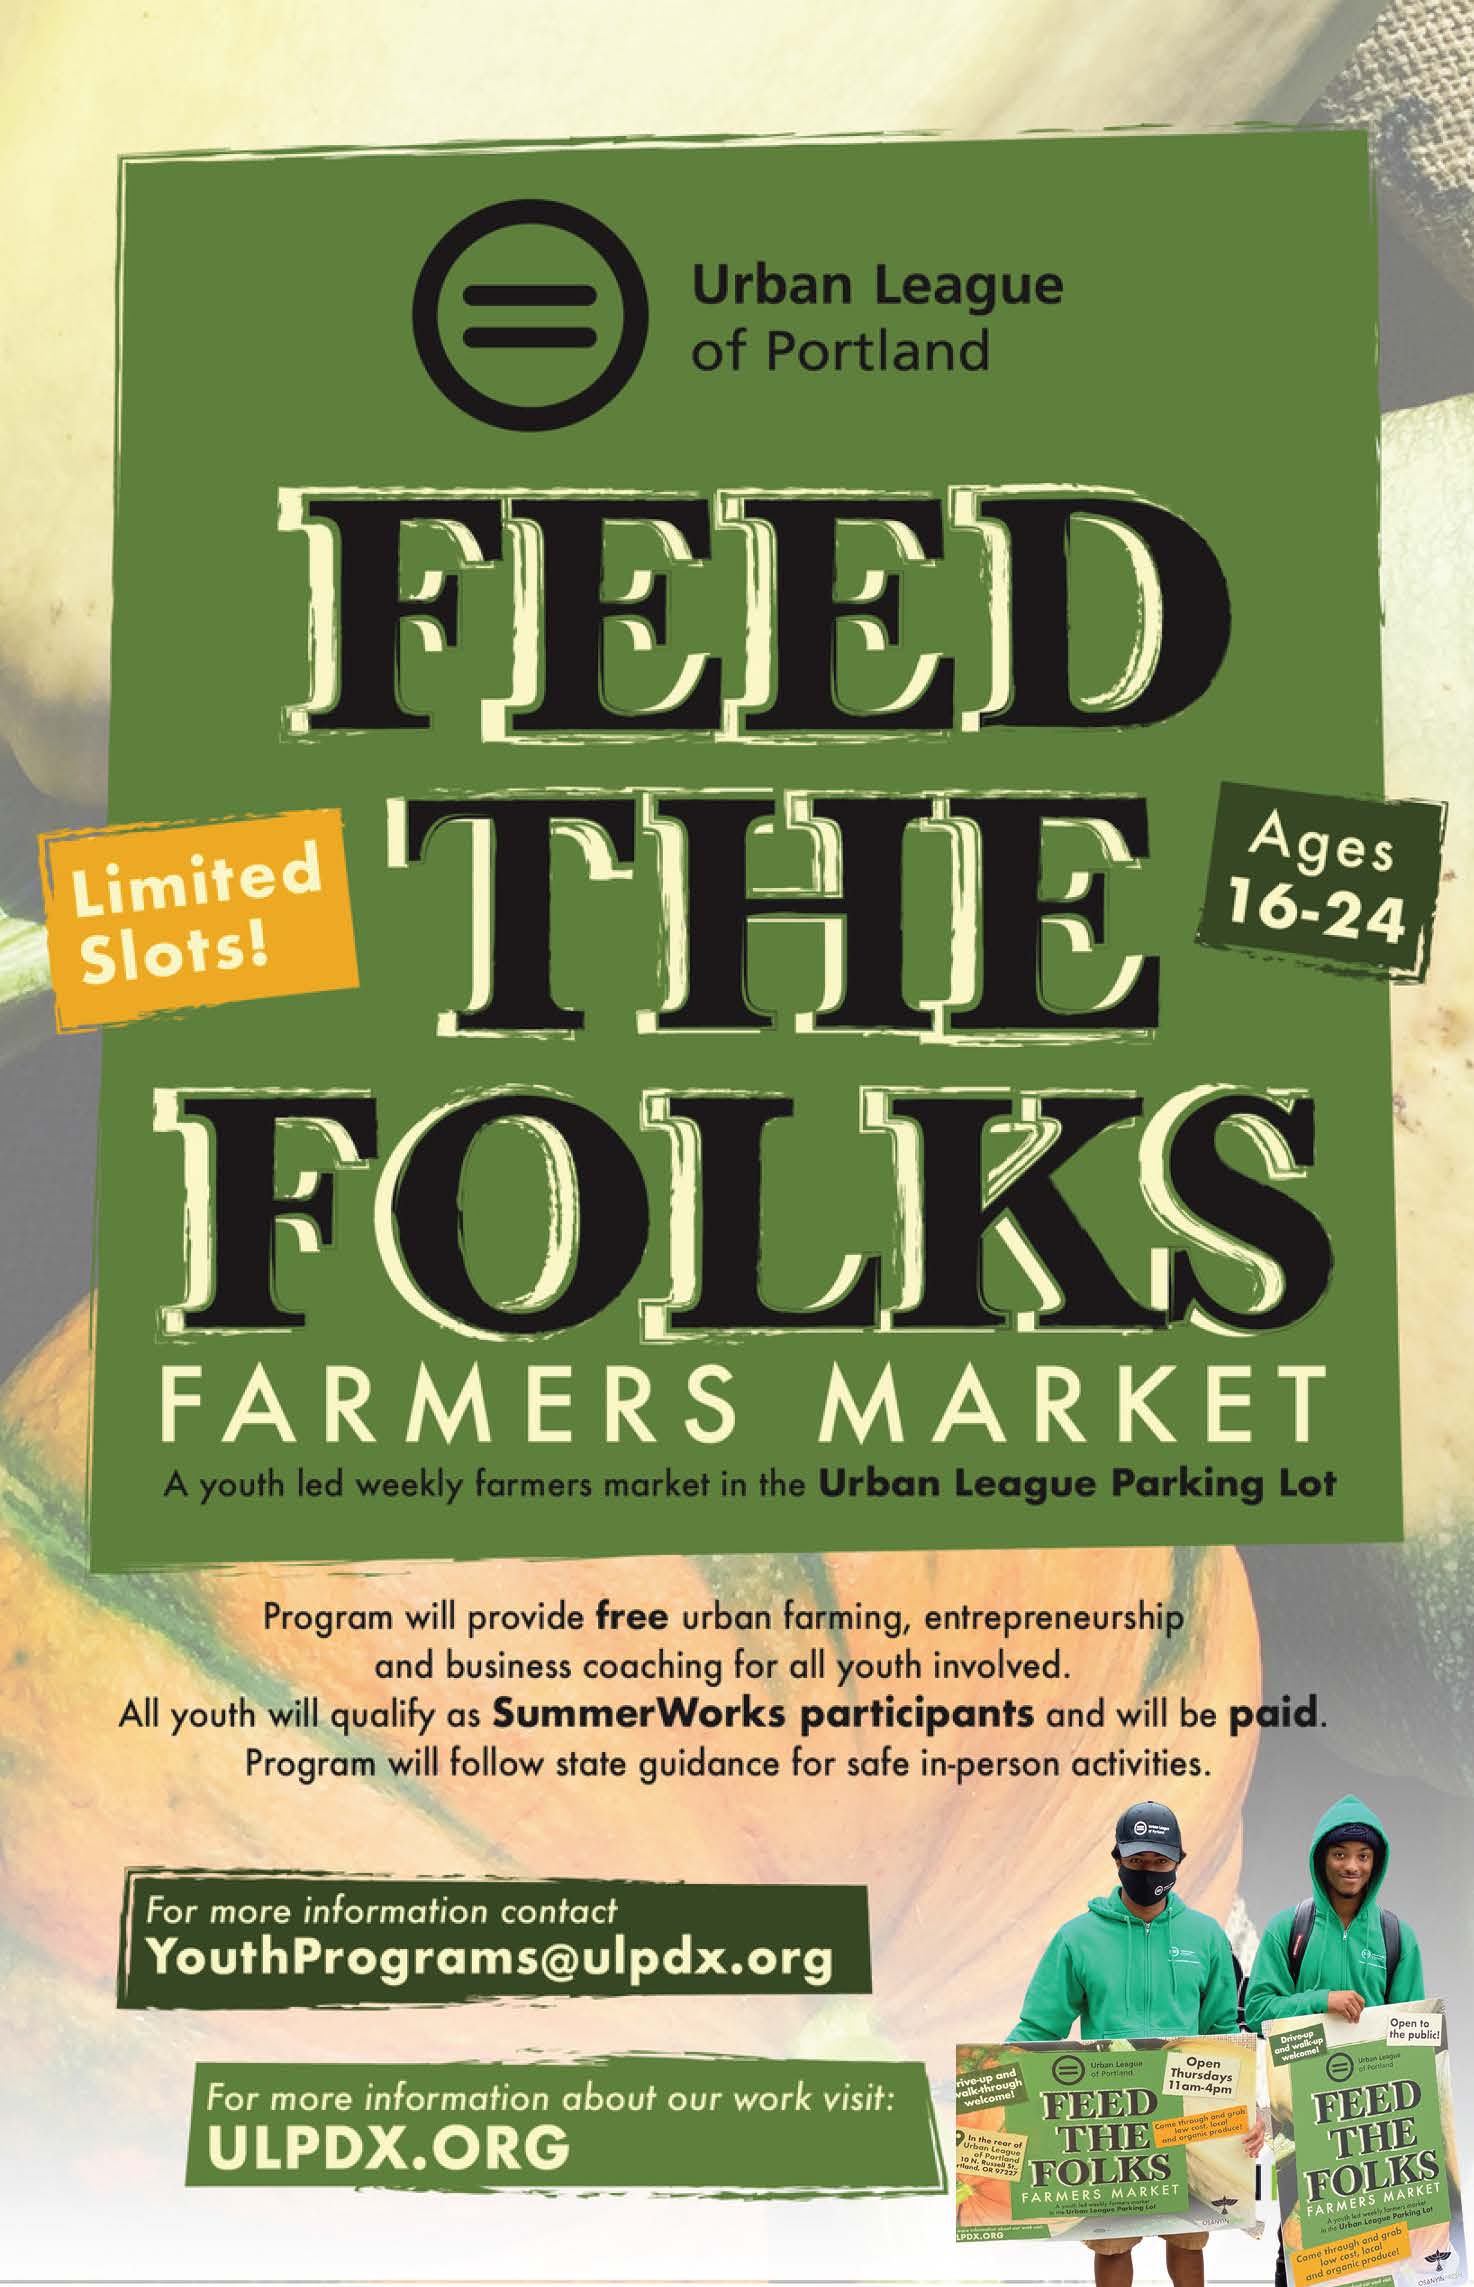 Feed the Folks Farmers Market